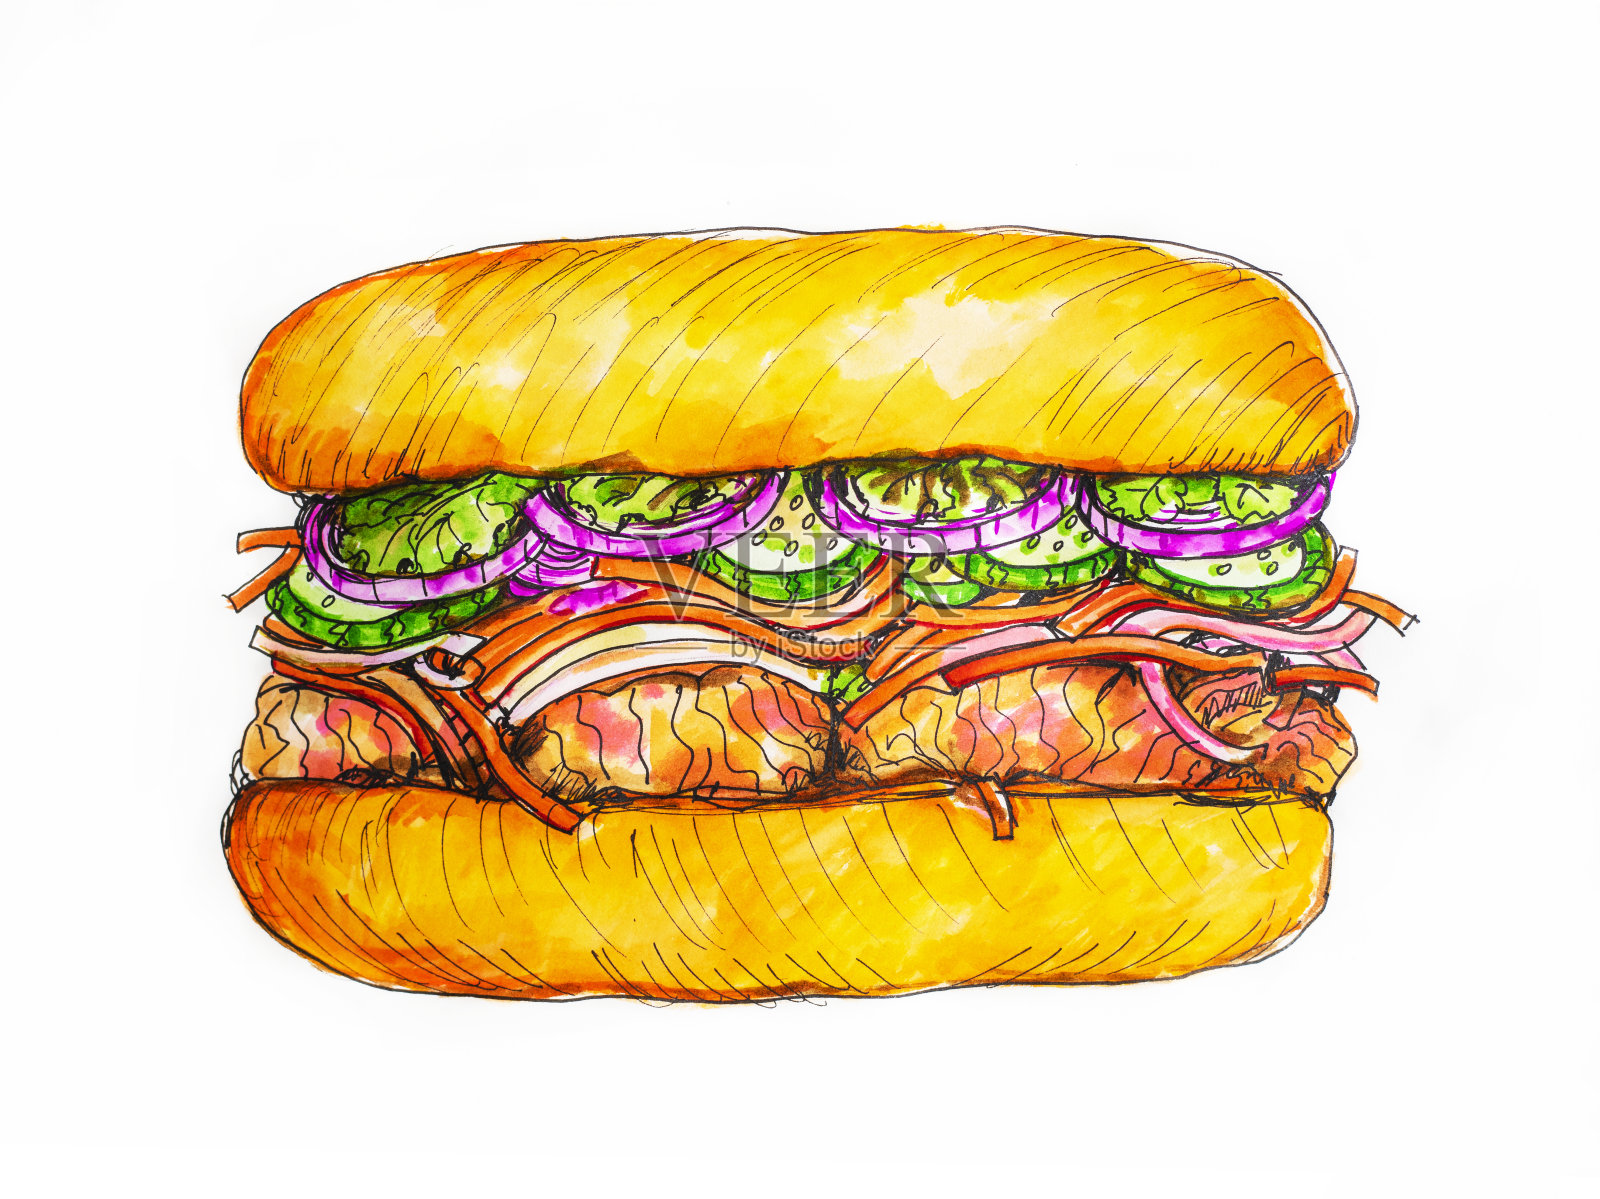 Sandwich clipart triangle sandwich, Sandwich triangle sandwich Transparent FREE for download on ...